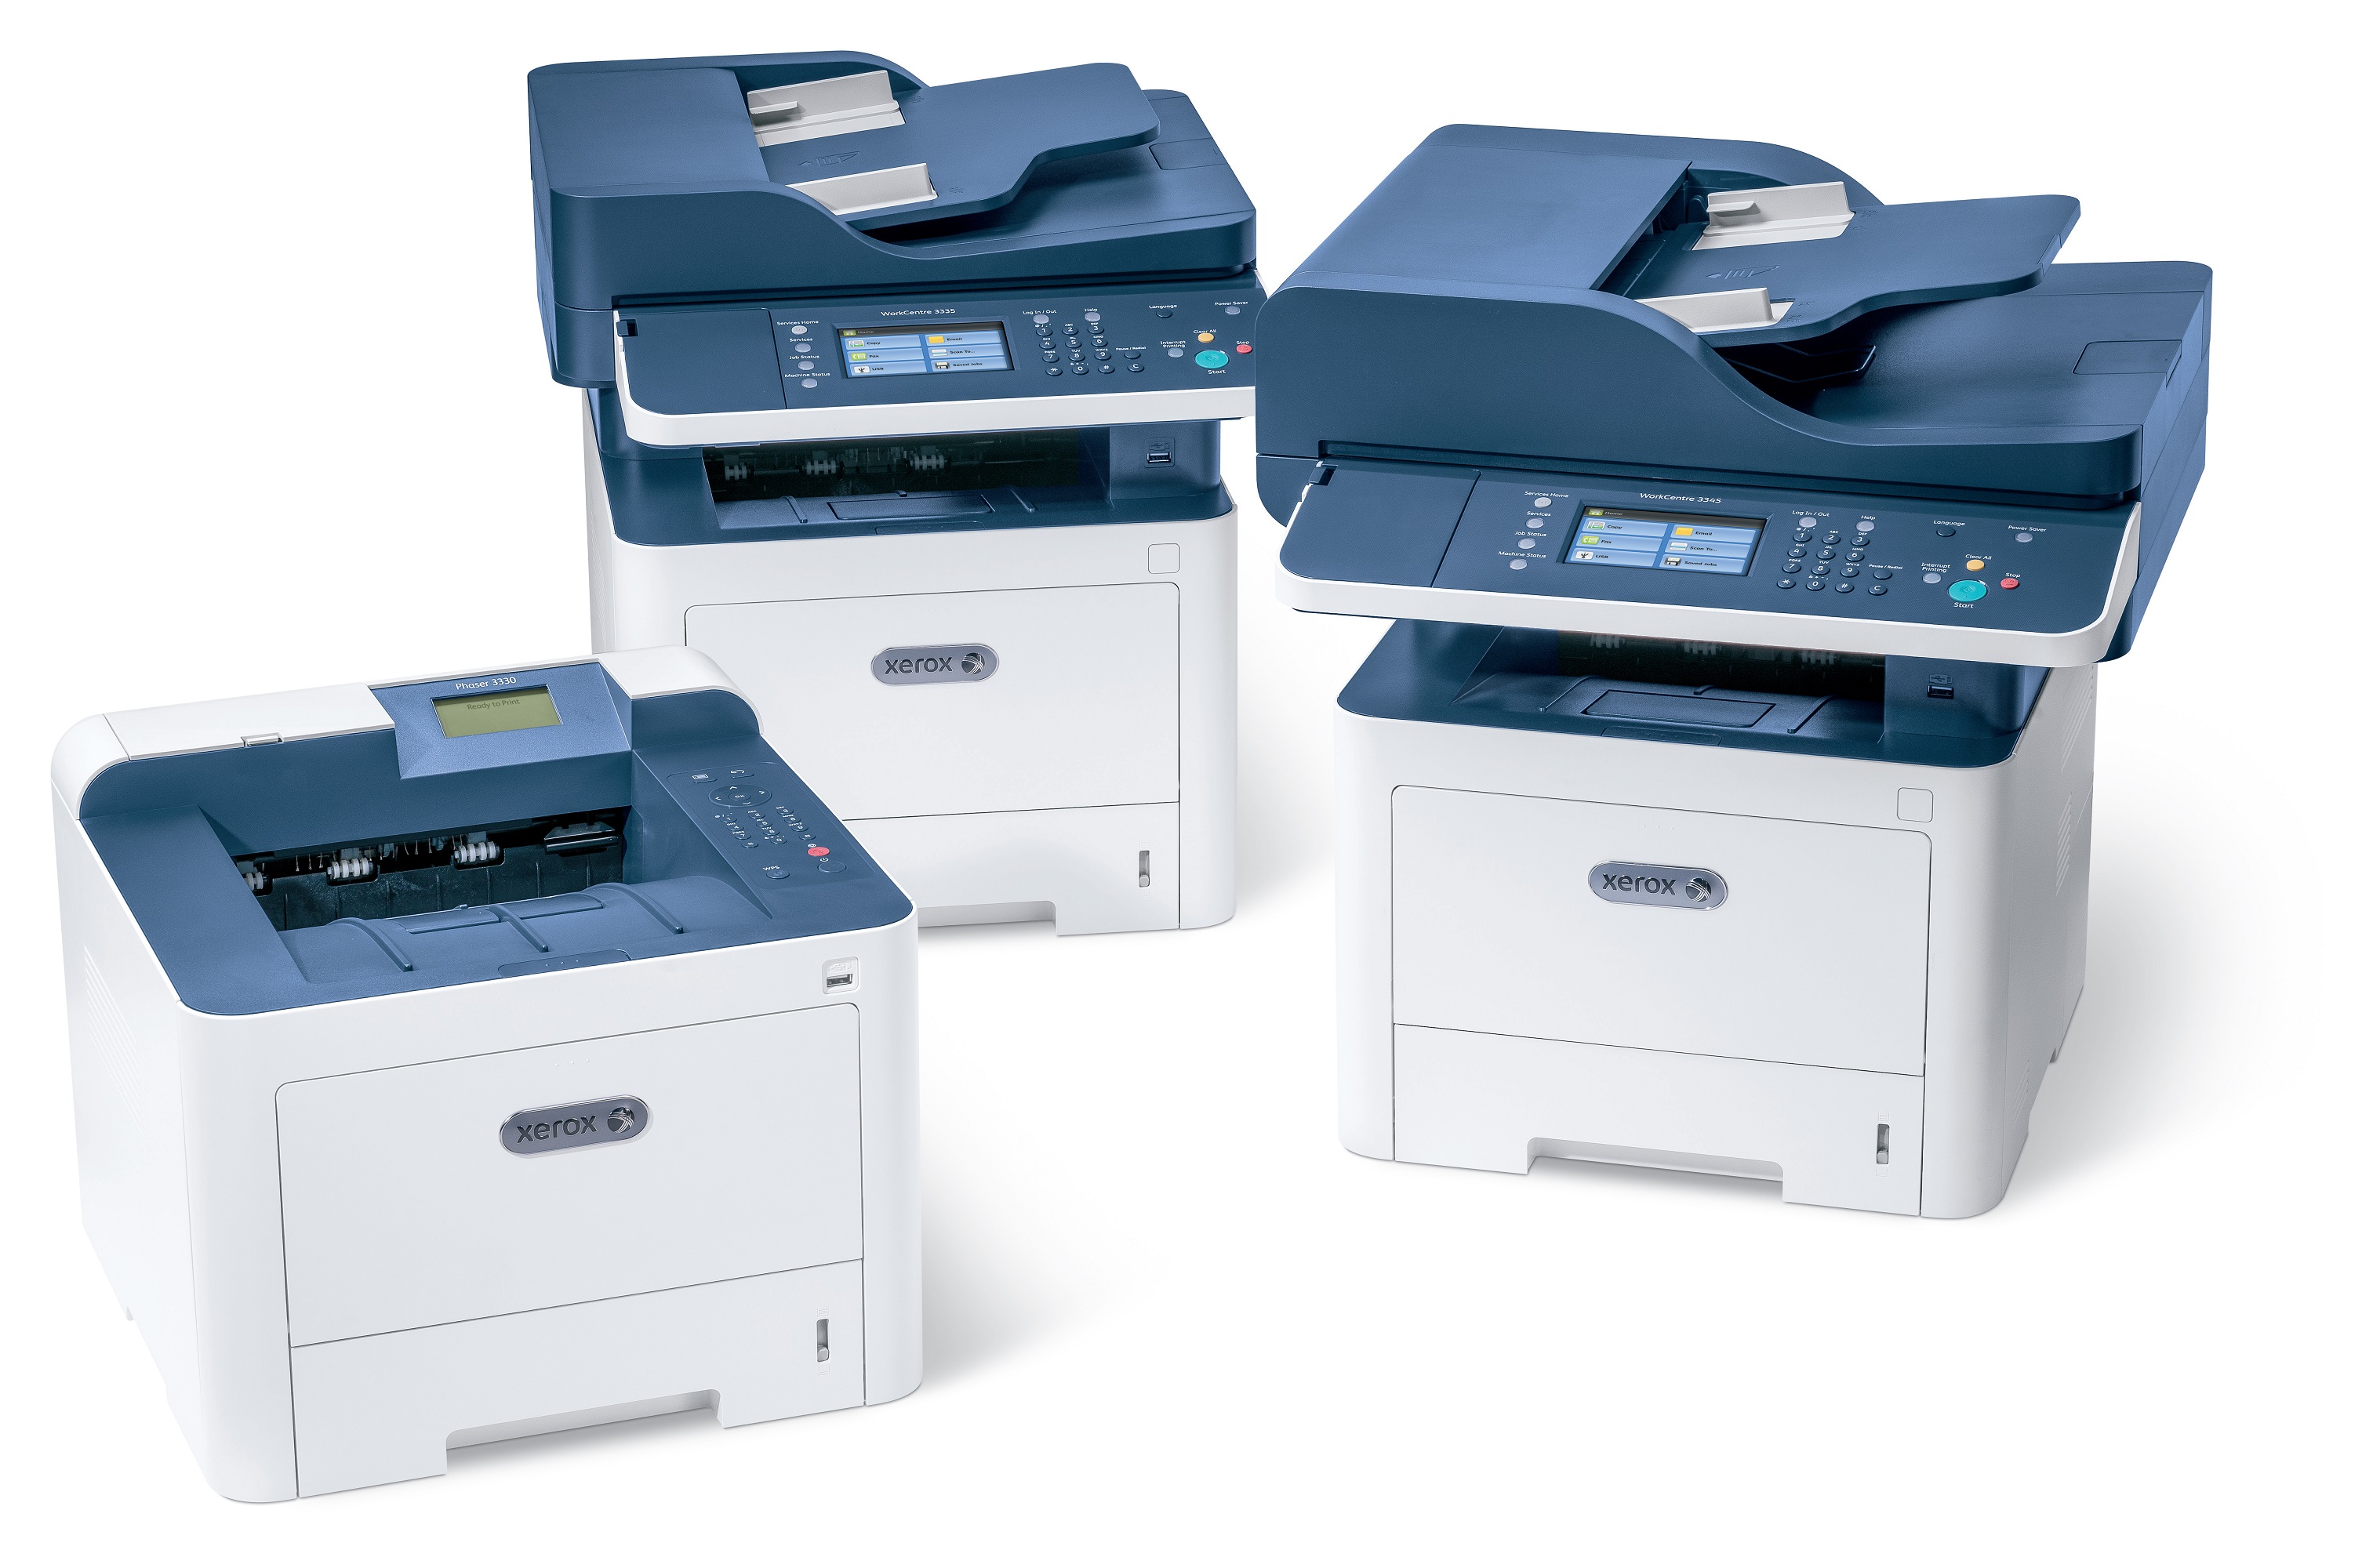 Xerox wc 3345. Принтер 3345 Xerox. МФУ Xerox WORKCENTRE 3345. Принтер Xerox WORKCENTRE 3345. Принтер Xerox Phaser 3330.